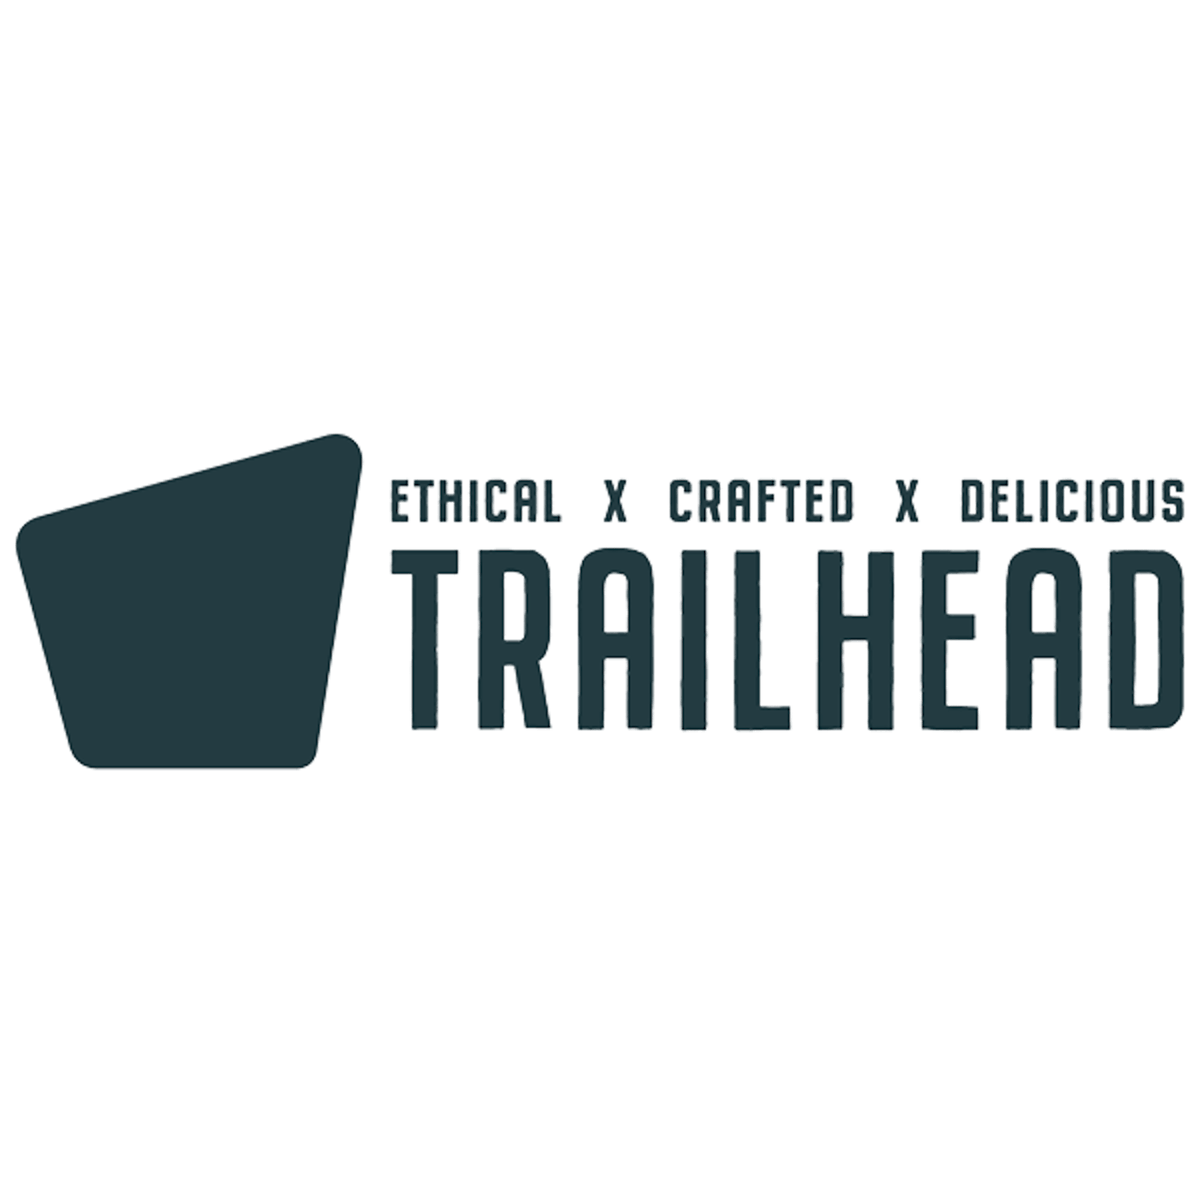 Trailhead Coffee Roasters Logo